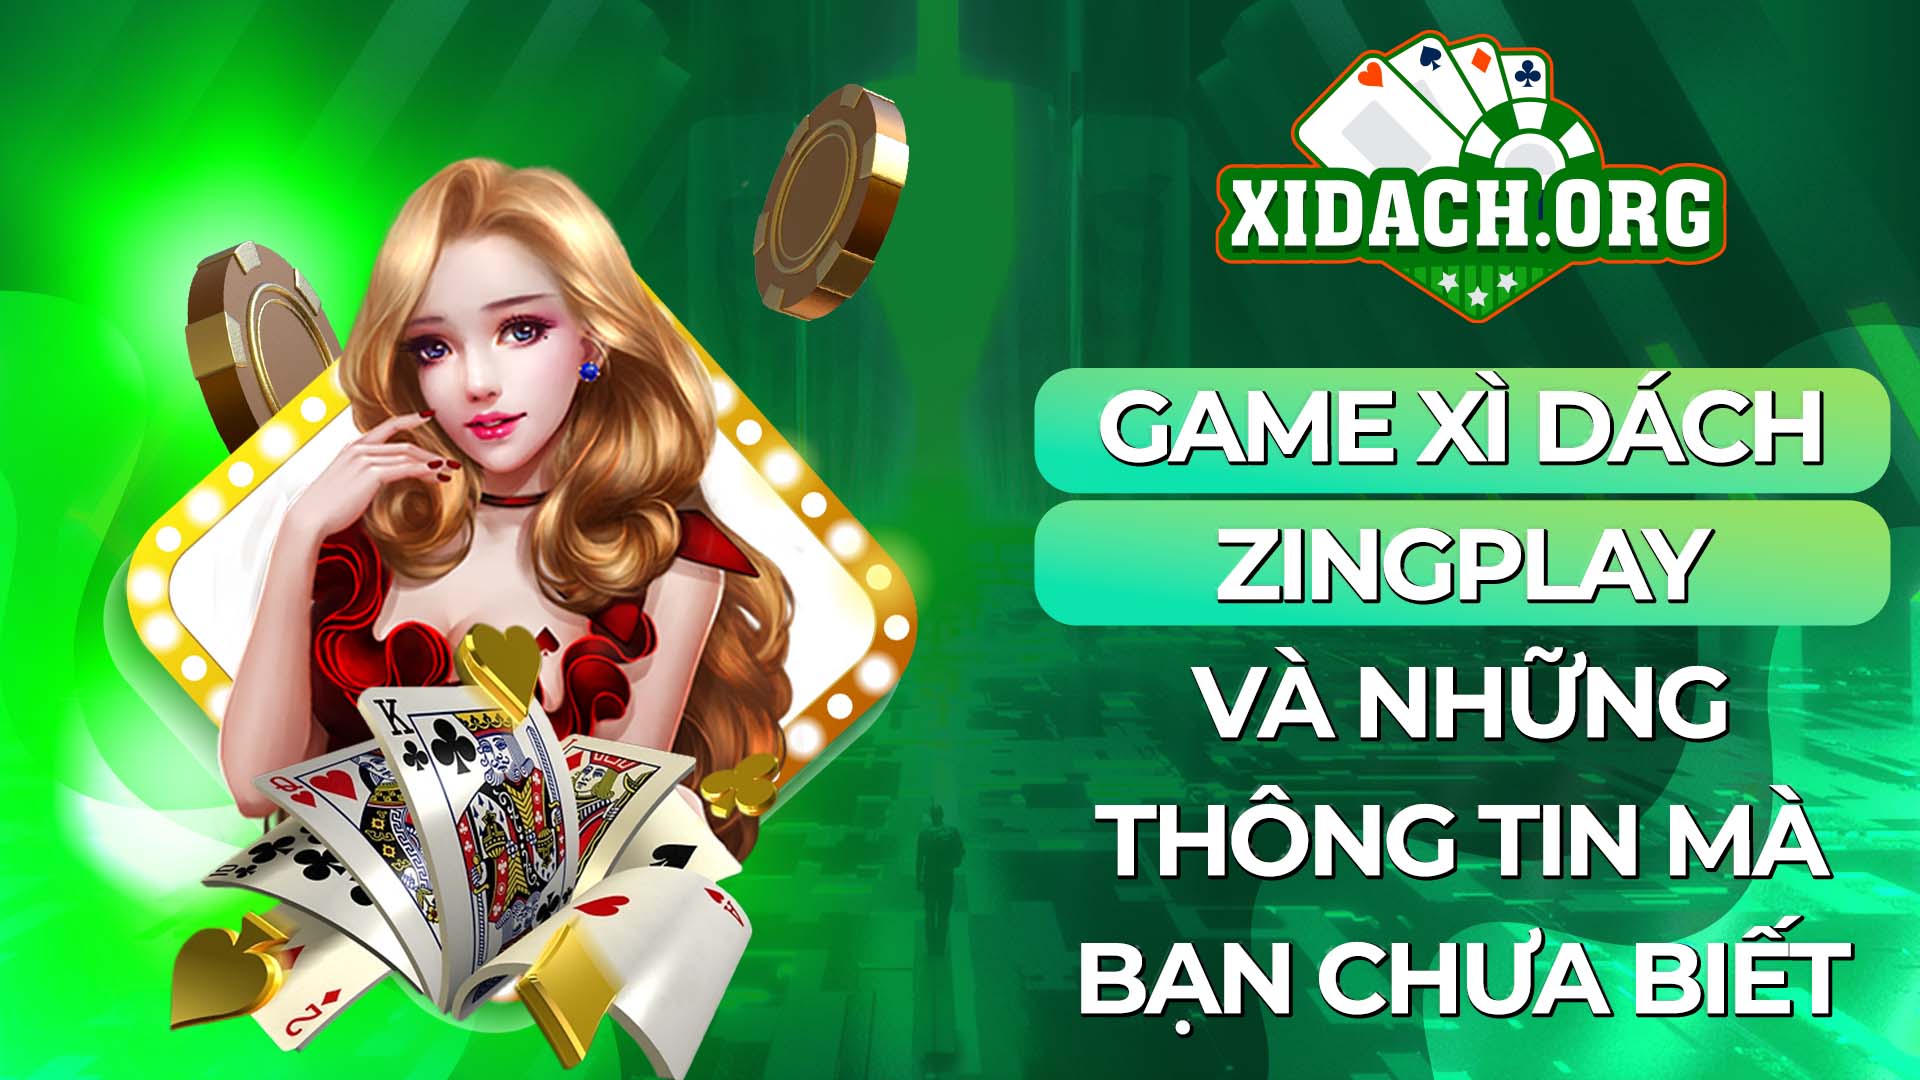 19 Game Xi Dach Zingplay Va Nhung Thong Tin Ma Ban Chua Biet